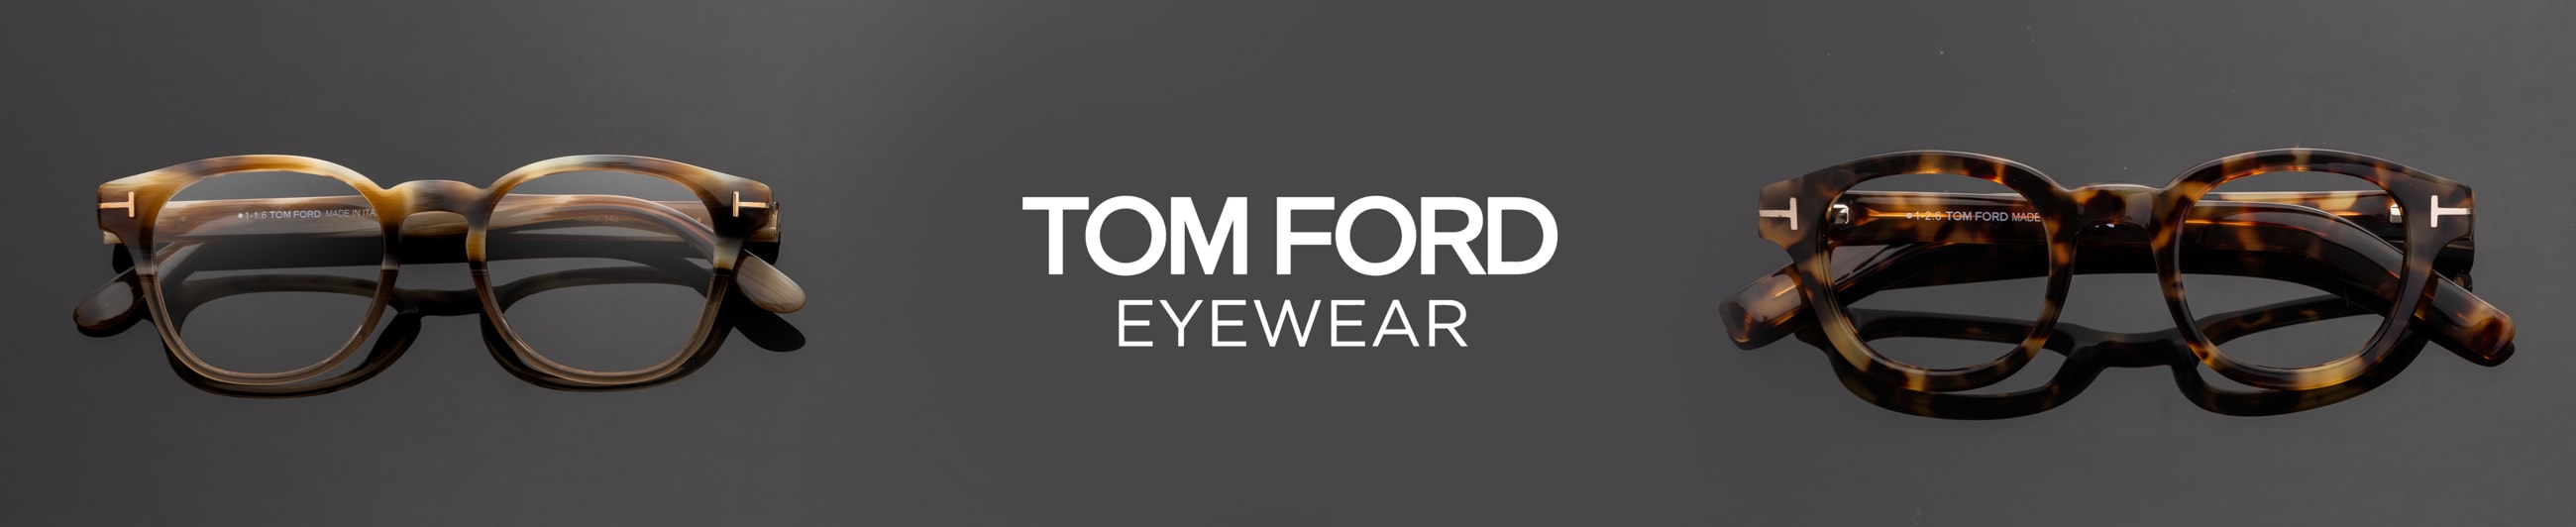 Tom Ford Glasses For Men and Women | Free Shipping & Returns